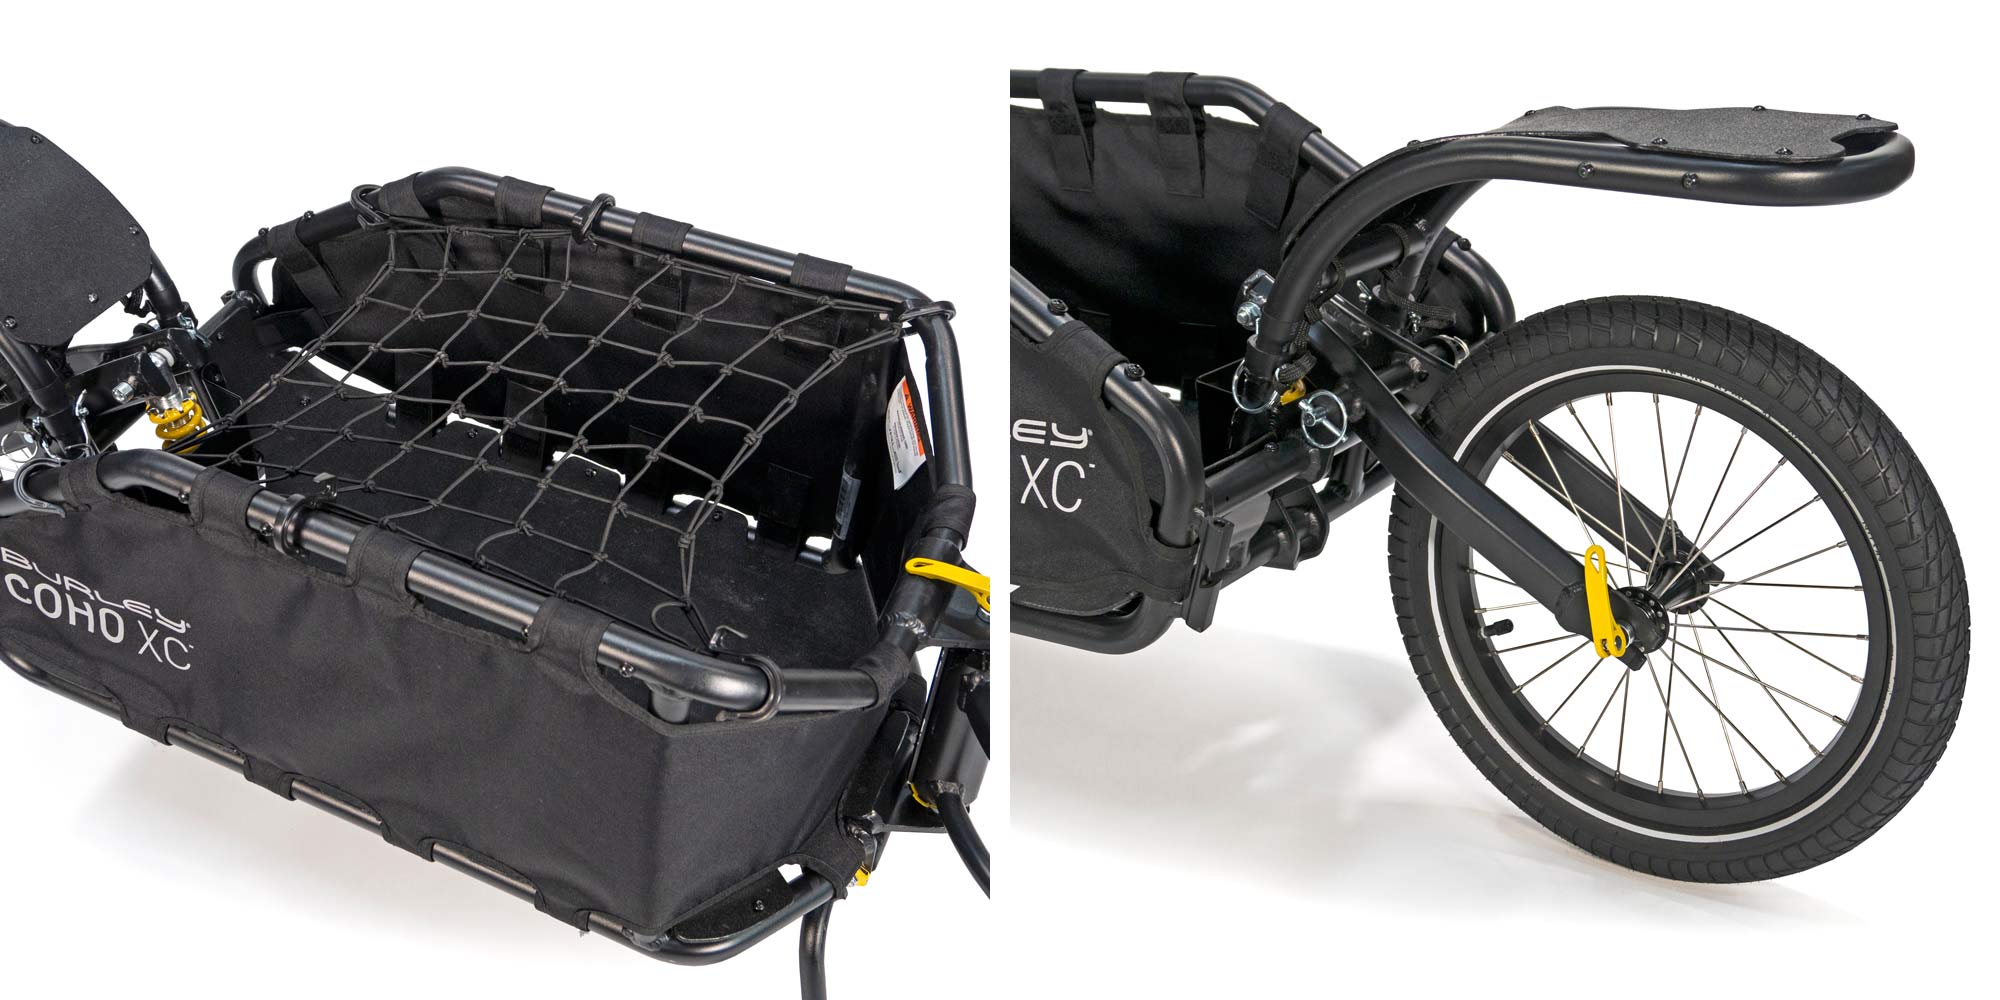 Burley Coho XC, an adventure-ready off-road bike trailer